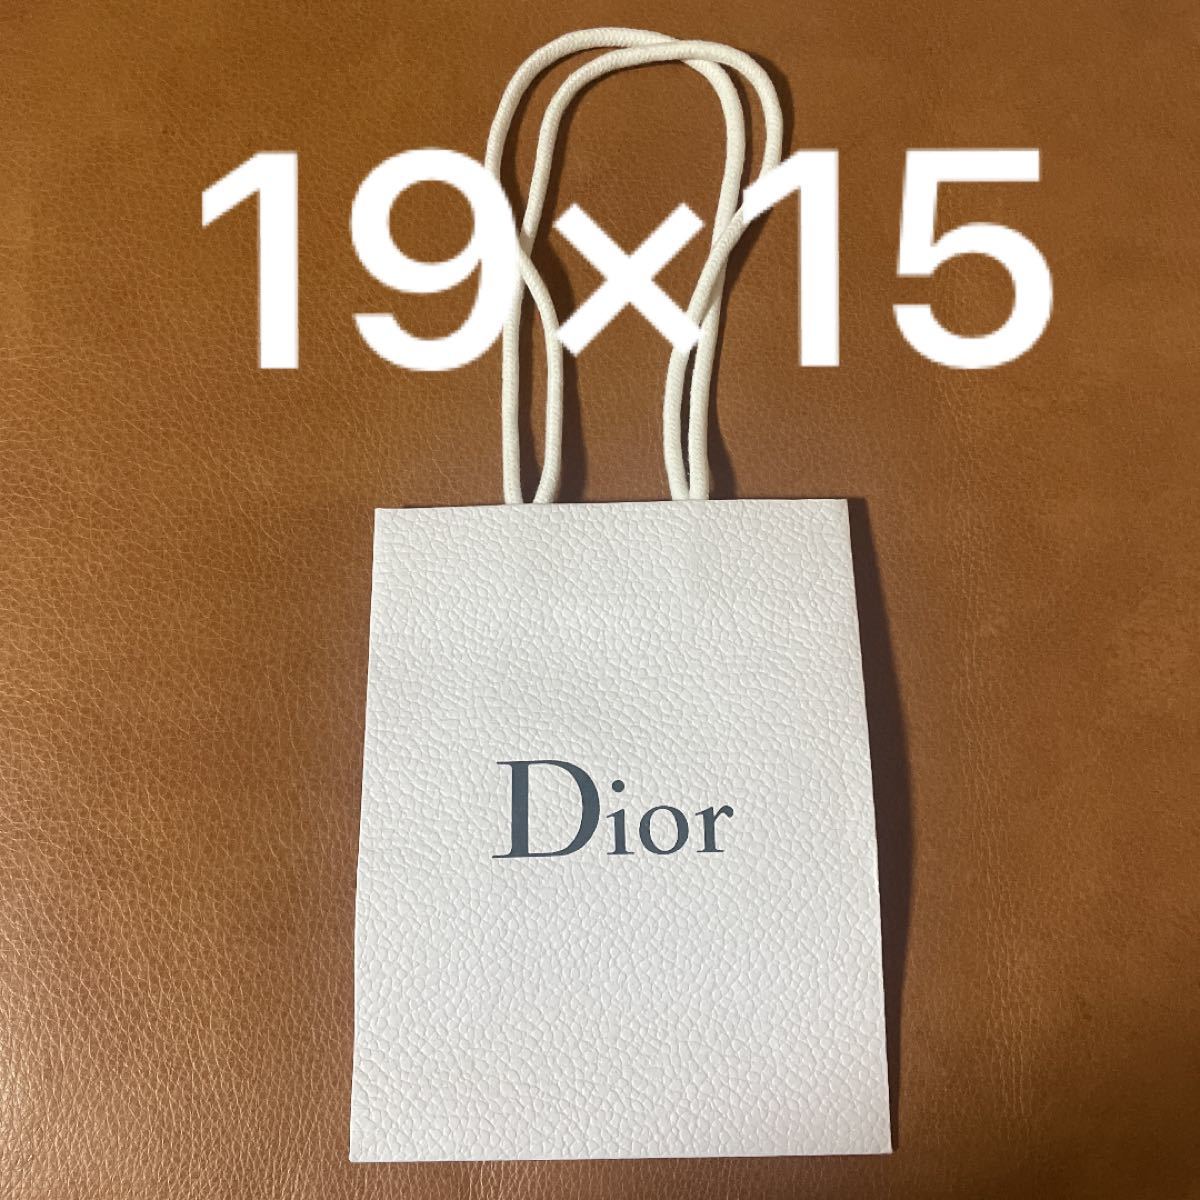 19×15 Dior ショップ袋 紙袋 ディオール ショッパー